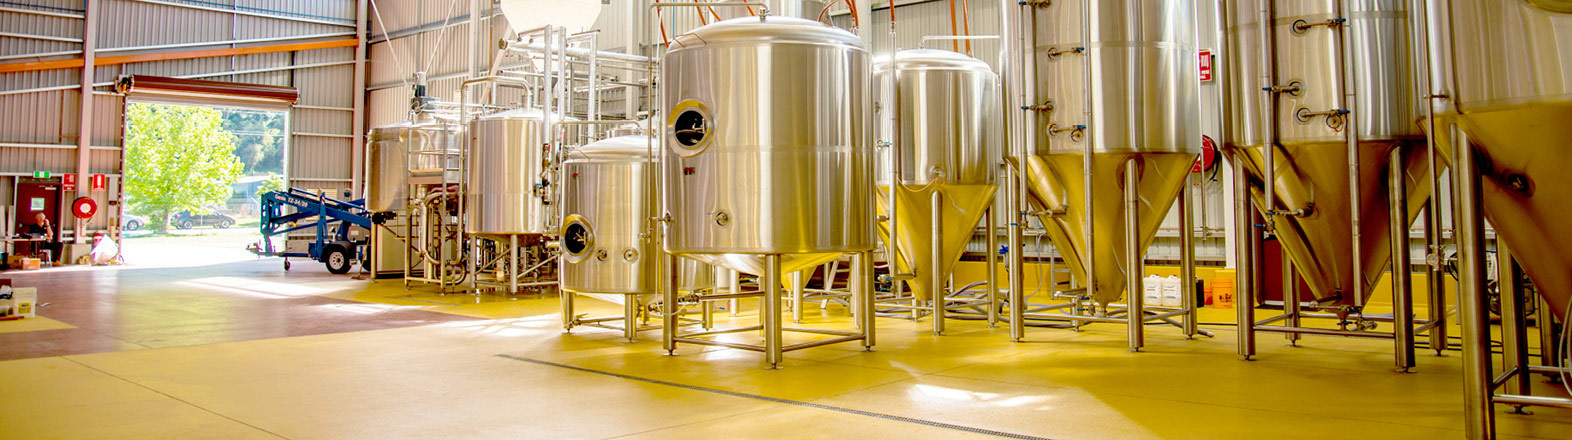 Flooring Design for
Breweries